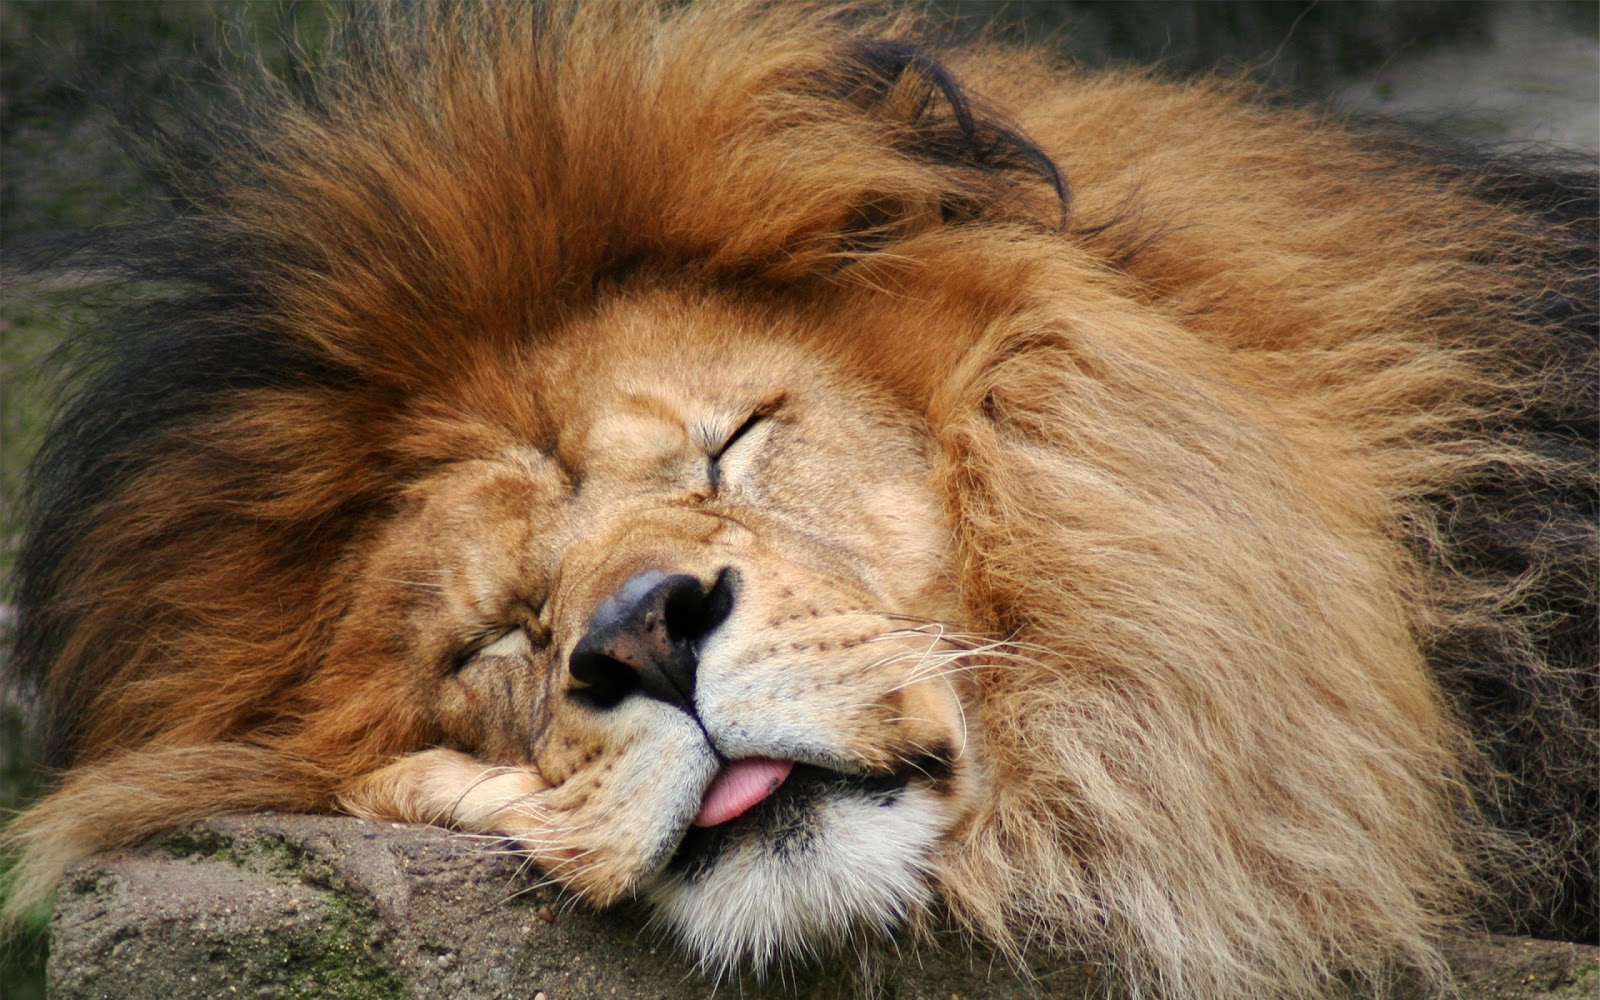 http://3.bp.blogspot.com/-3E3Jlnfrfj0/UJCFTuj0_EI/AAAAAAAAETE/FTYLQ1ztzis/s1600/Lion_sleeping.jpg